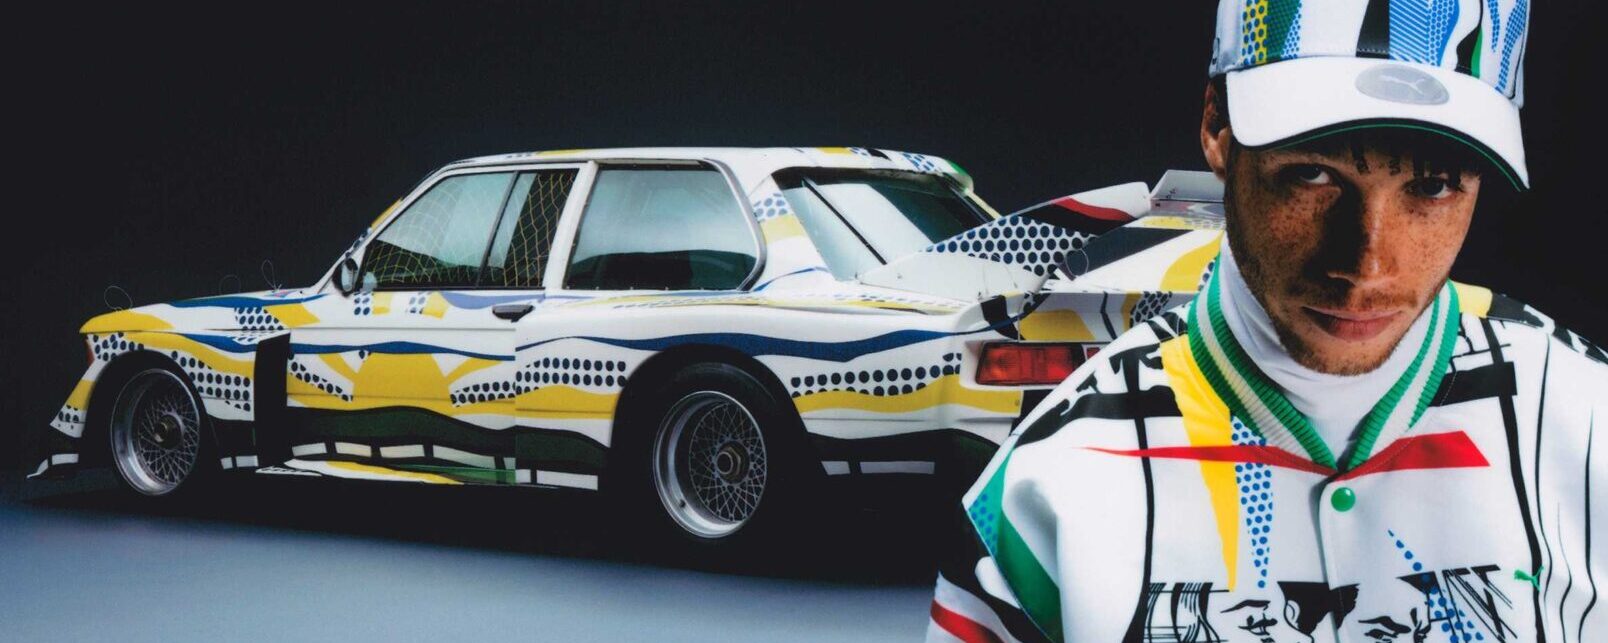 New PUMA x BMW Motorsport collaboration brings Roy Lichtenstein’s Dynamic BMW Art Car back into spotlight